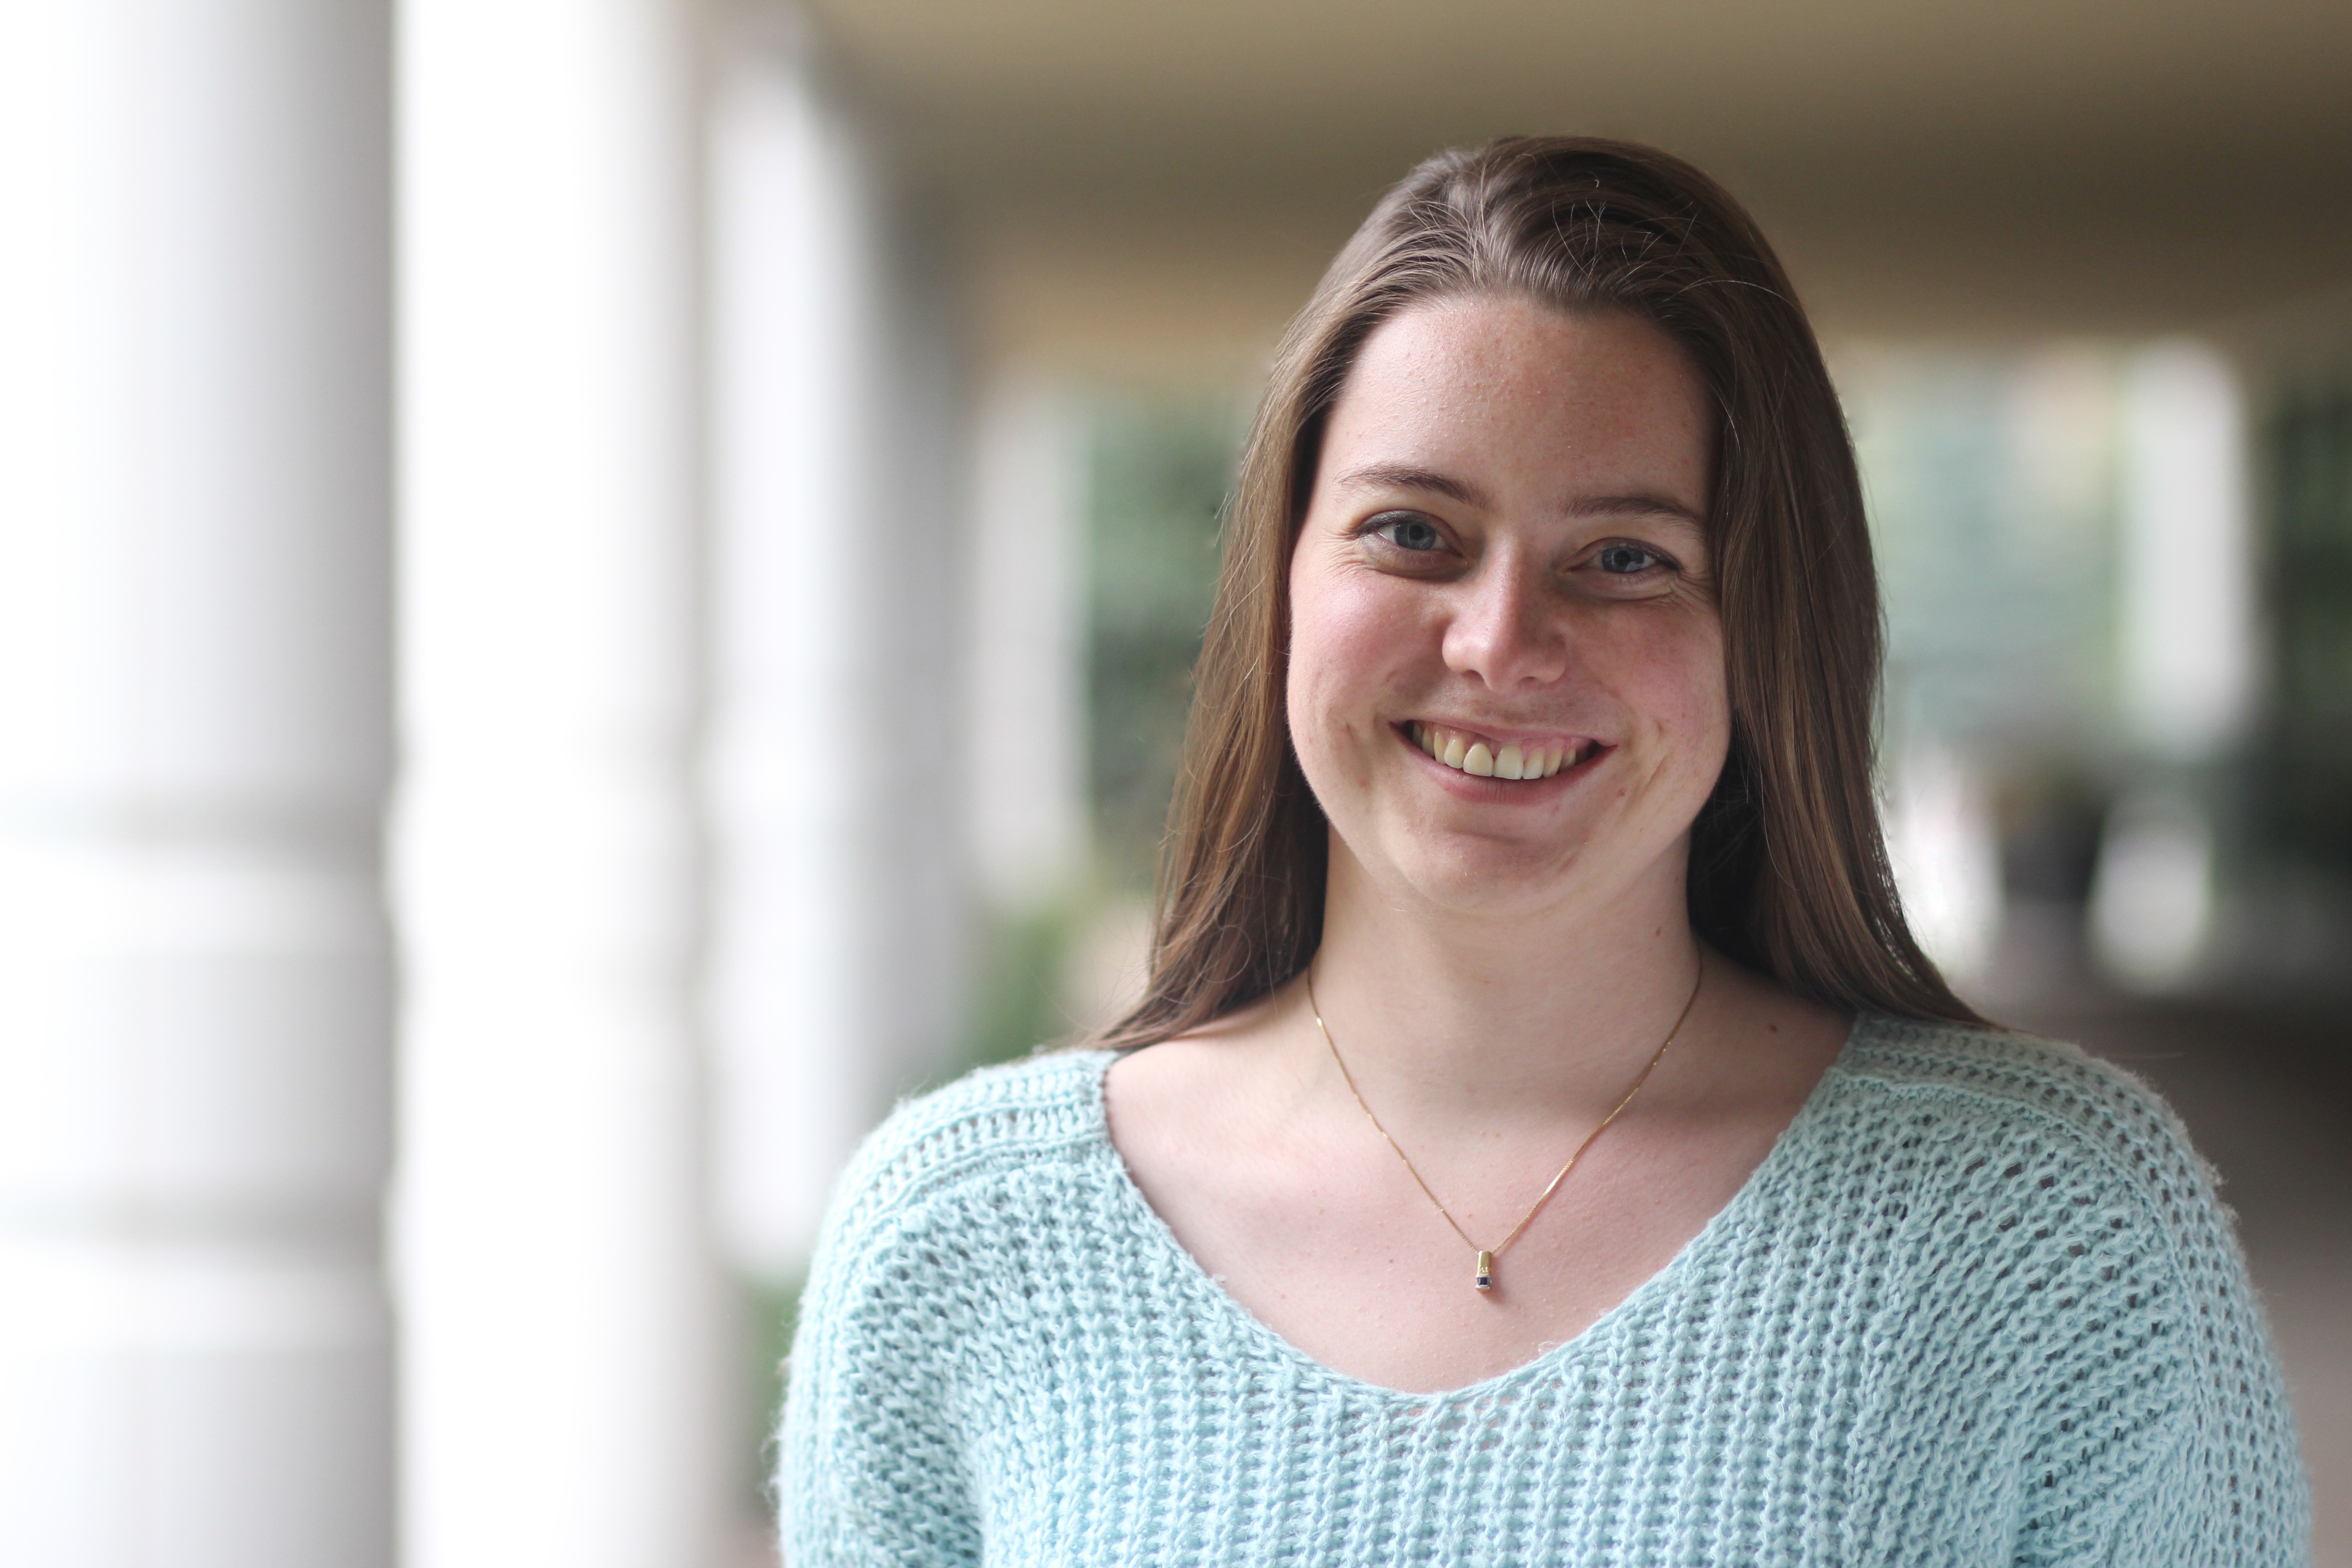 Kiki van Essen's goal is to pursue her Ph.D. in Communication Studies.